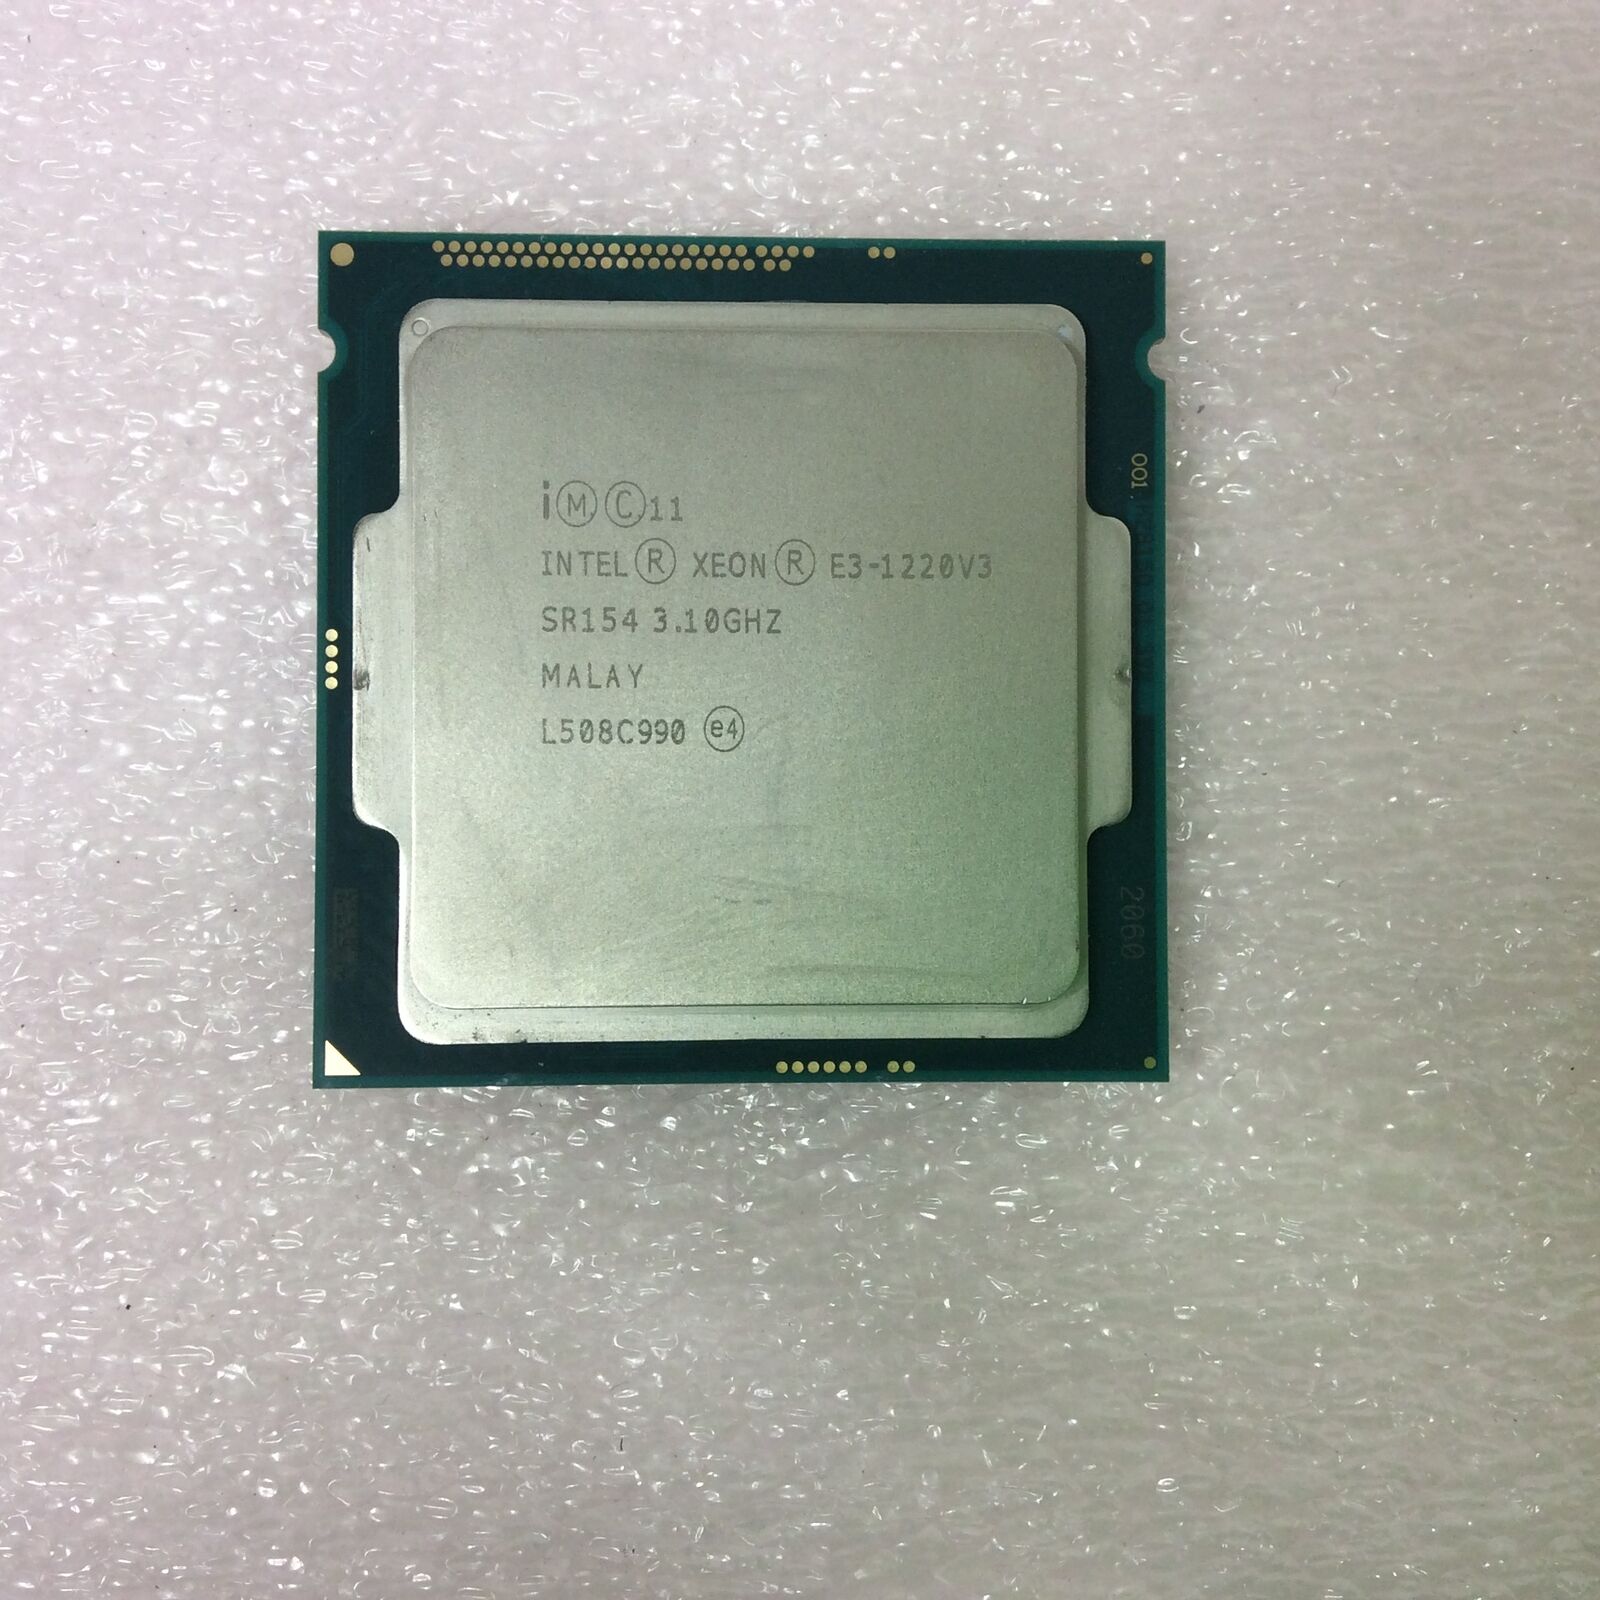 Intel® Xeon® Processor E3-1220 v3 (8M Cache, 3.10GHz up To 3.50GHz) SR154